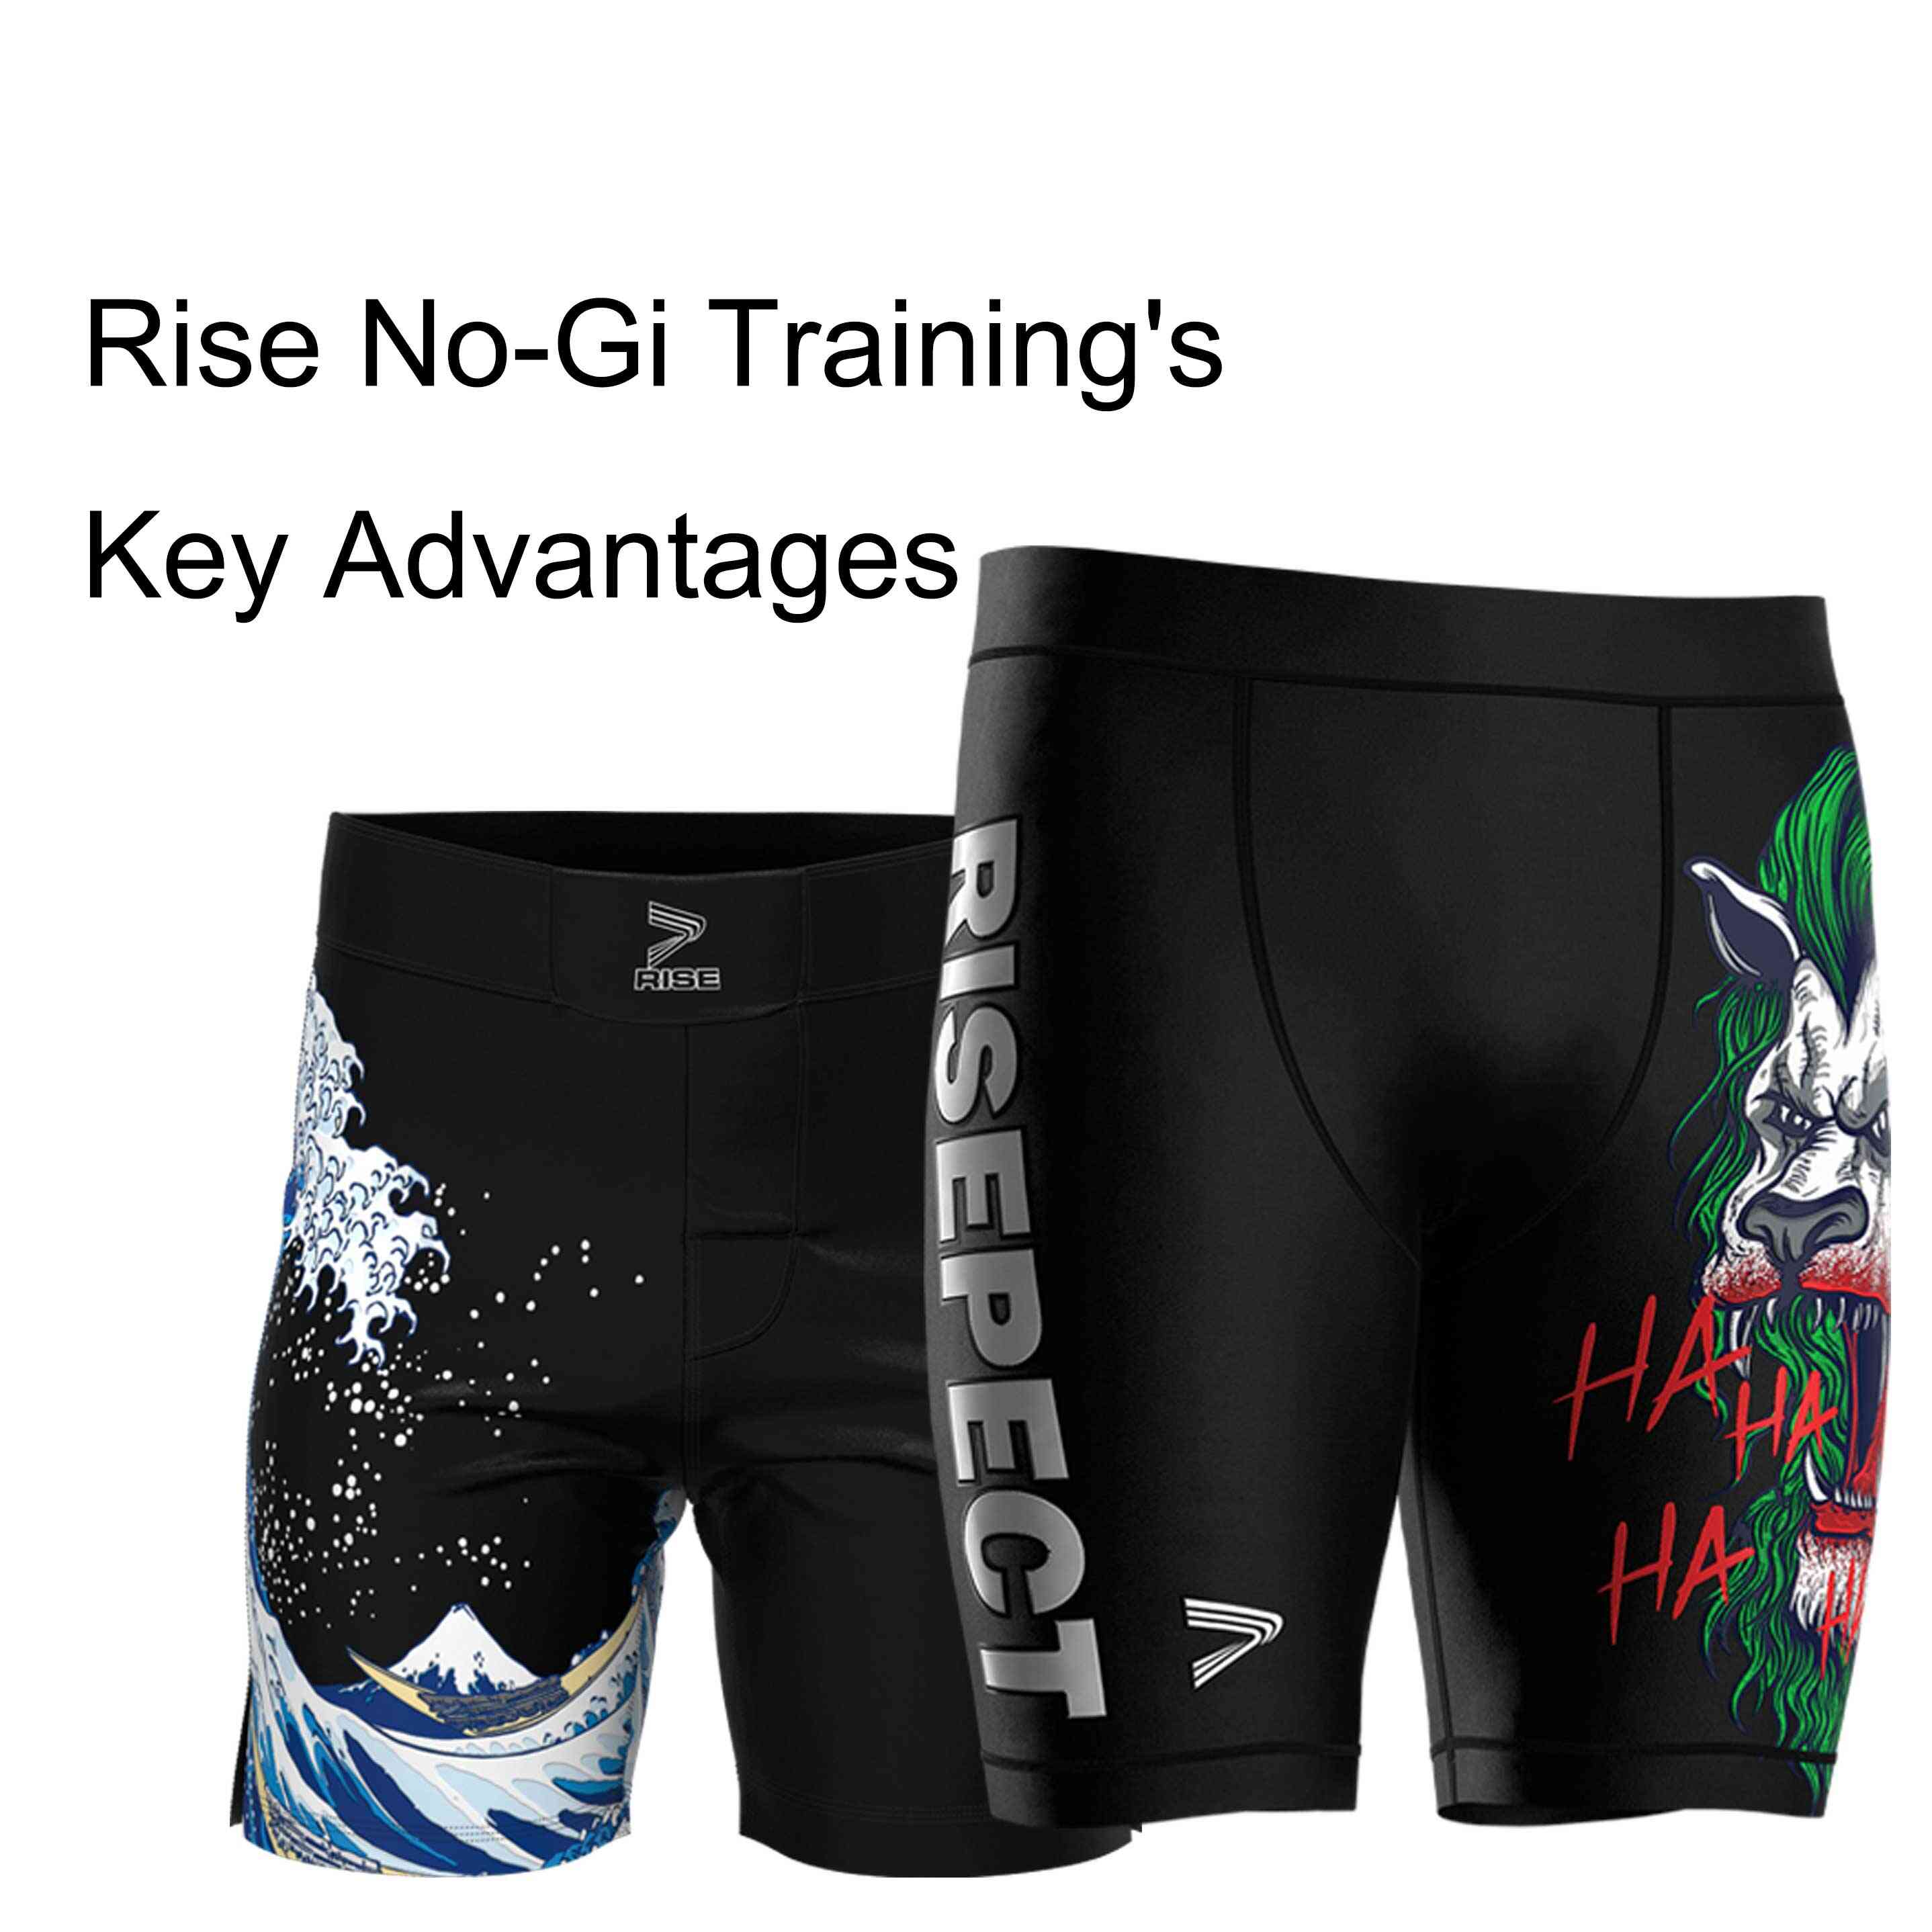 
                Rise No-Gi Training's Key Advantages